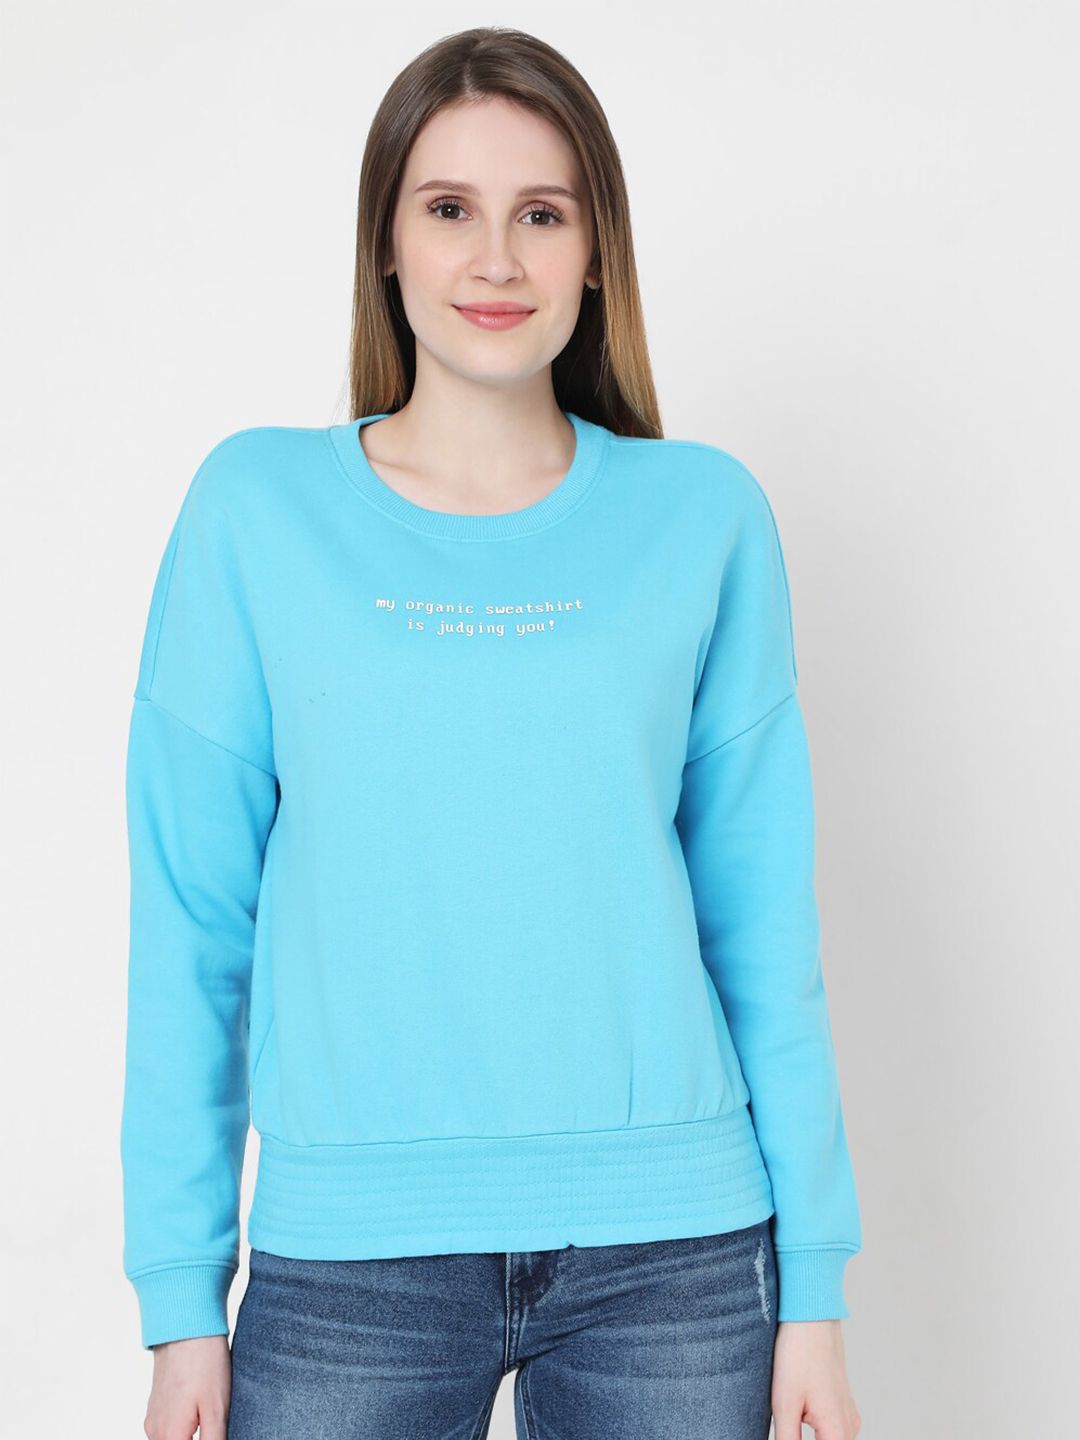 Vero Moda Women Blue Sweatshirt Price in India